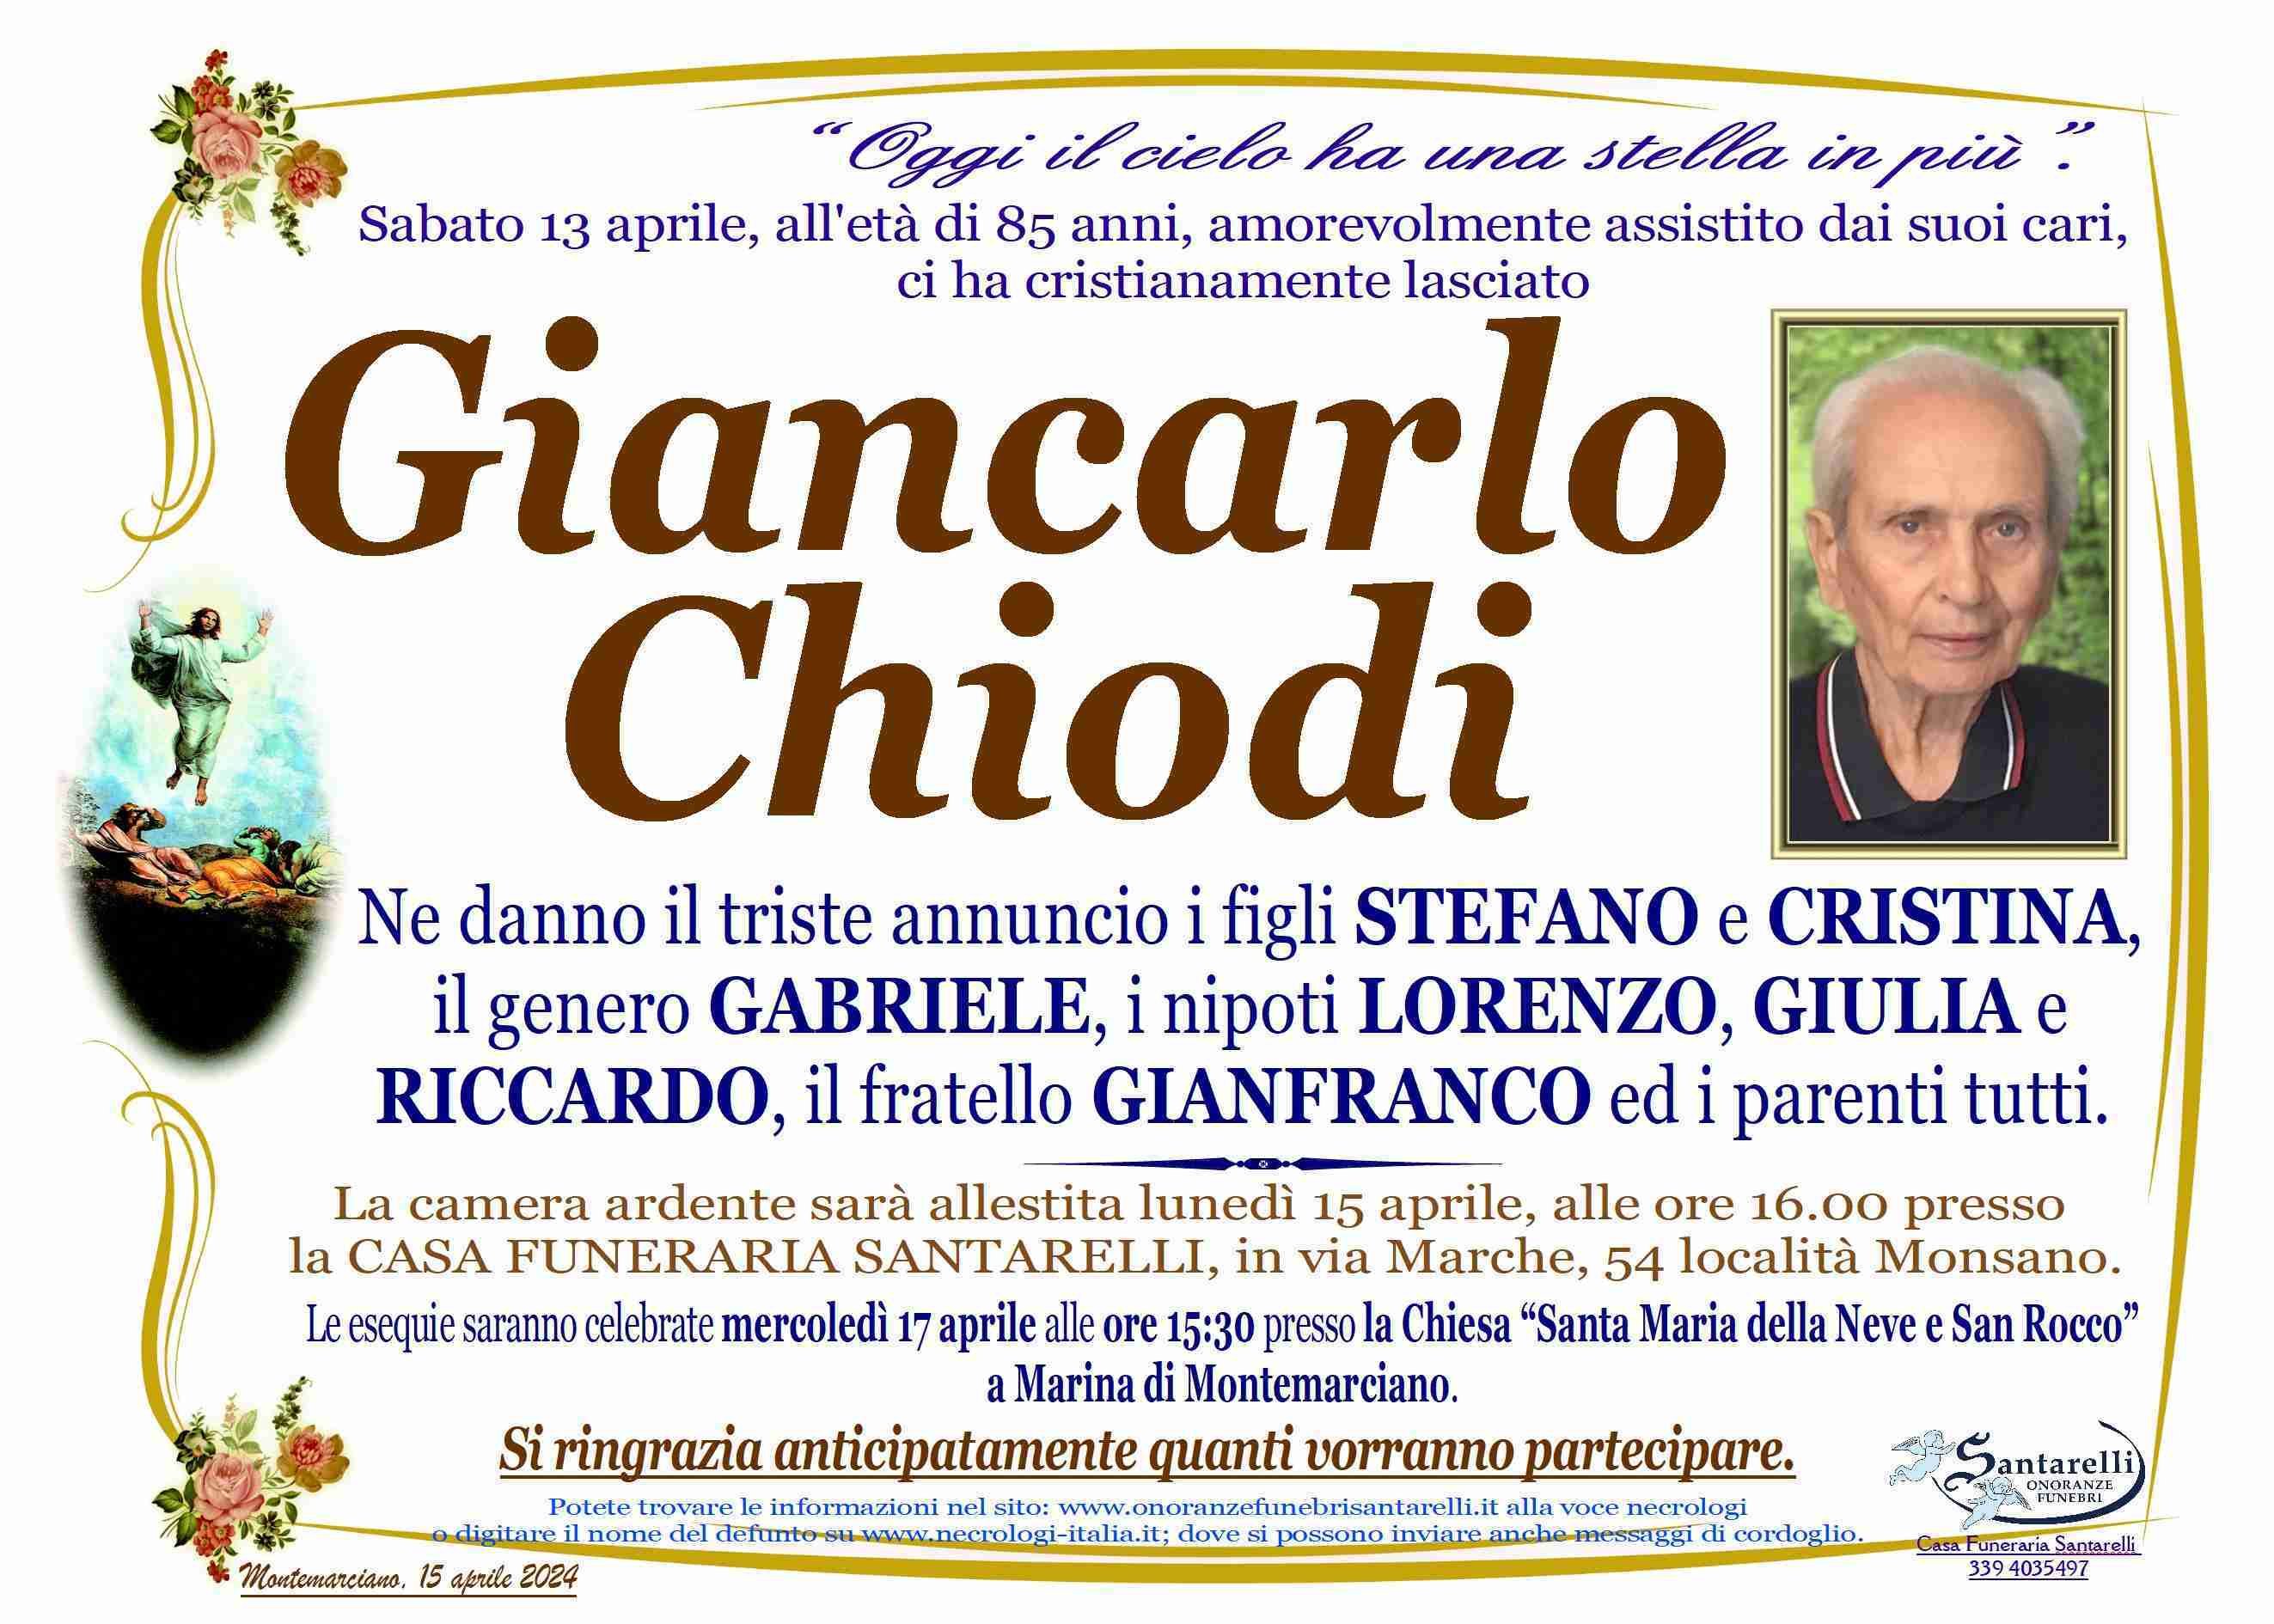 Giancarlo Chiodi